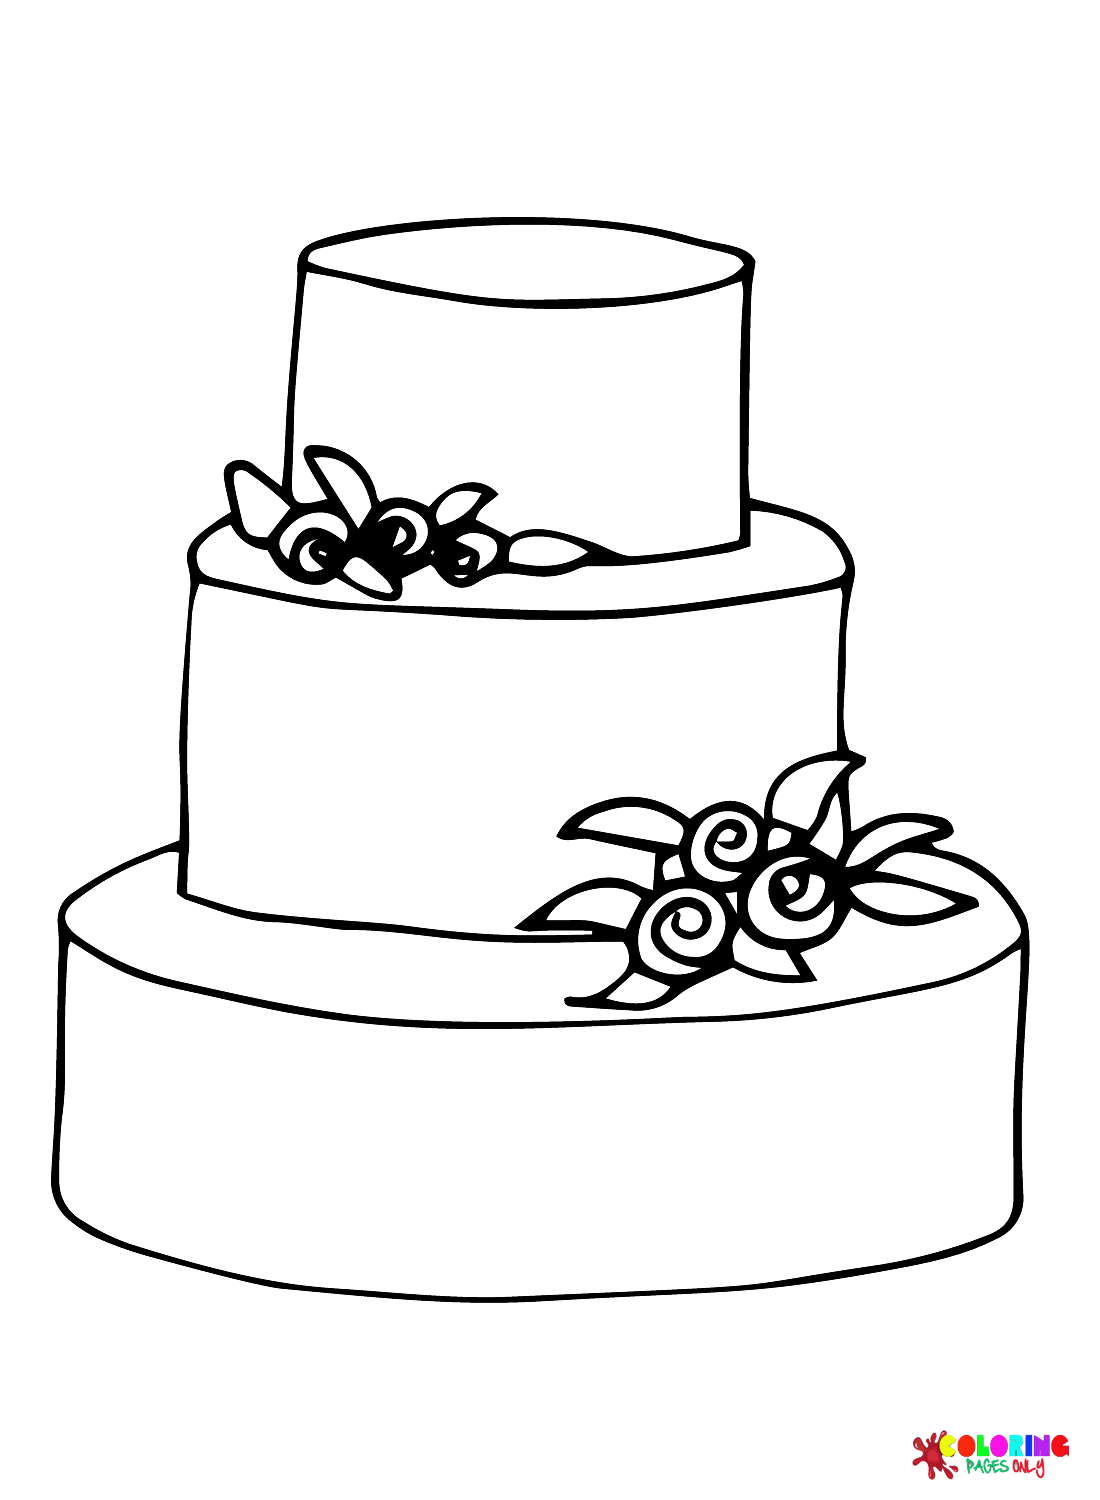 Bolo de casamento grátis do bolo de casamento